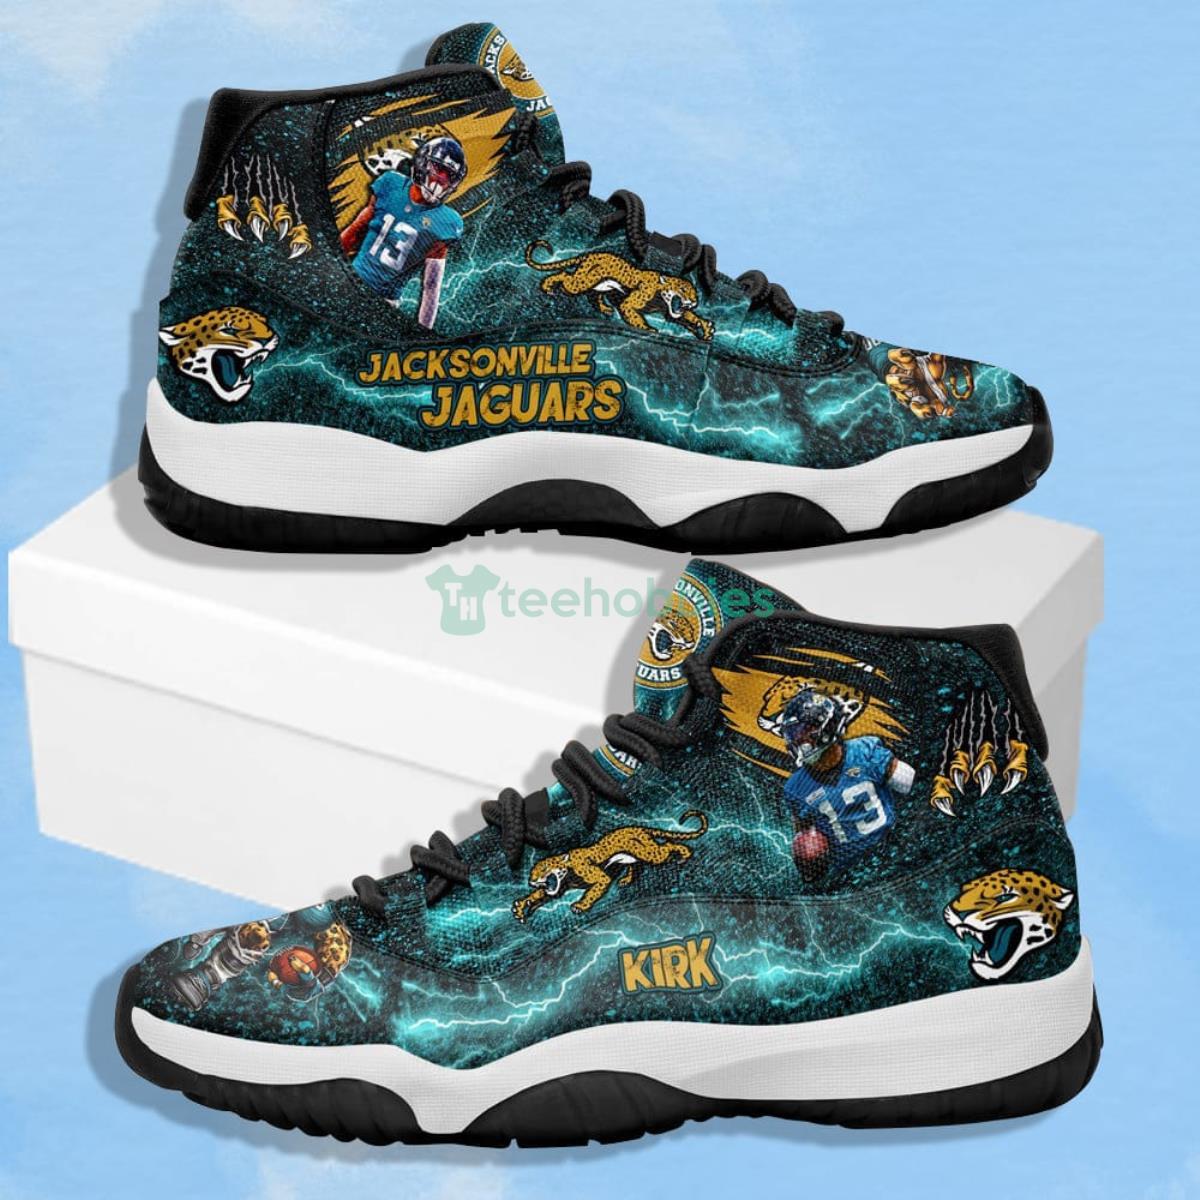 Jacksonville Jaguars - Christian Kirk Impressive Design Air Jordan 11 Shoes Product Photo 1